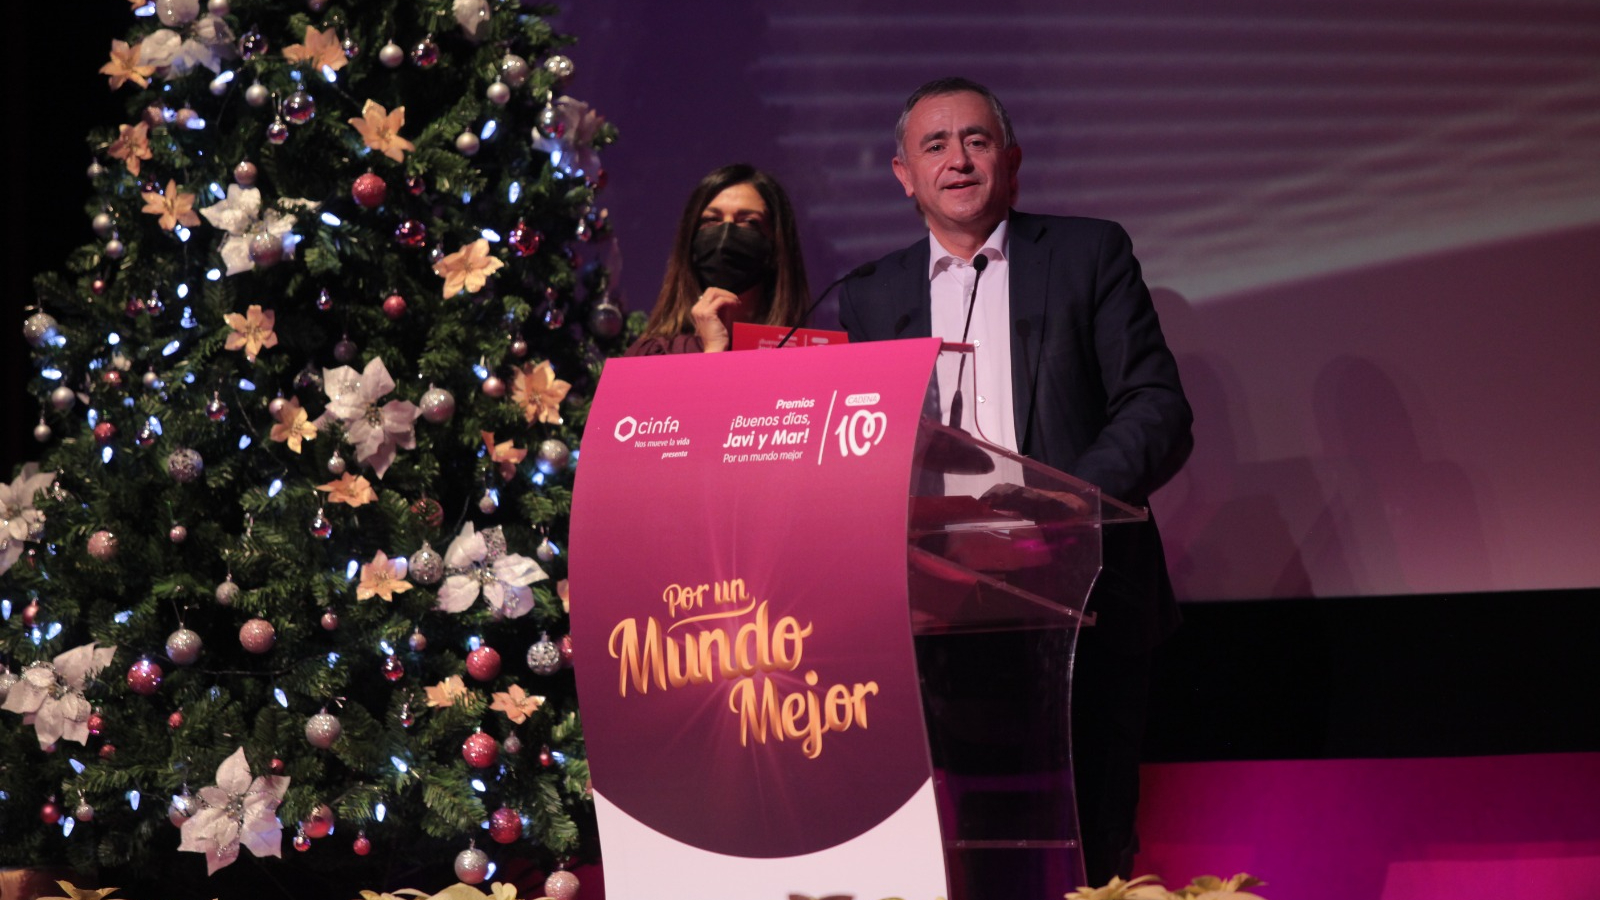 Fernando Giménez Barriocanal, presidente de Ábside Media: "La gala refleja belleza y luz"